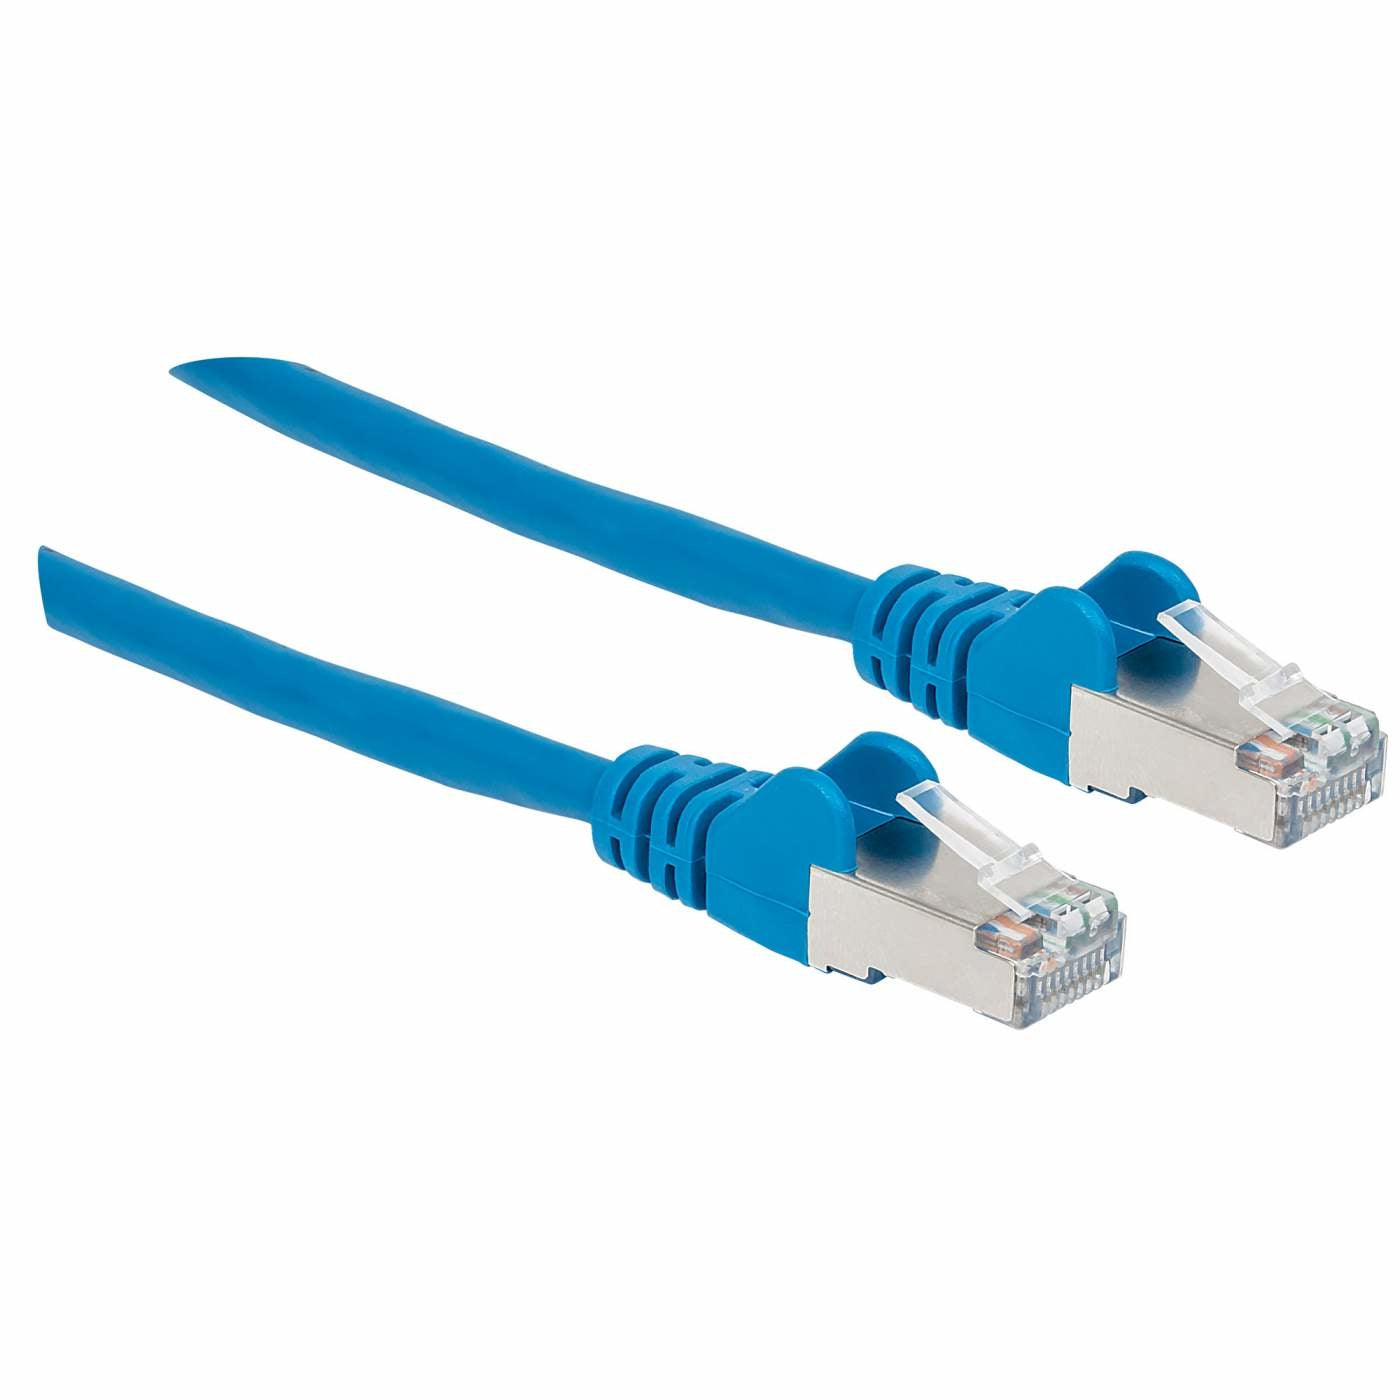 Cable De Red Cat6A S/Ftp Intellinet 741484 2.1 M Azulcon Blindaje Trenzado Aluminio Y Lámina Mylar Alrededor Cada Par.